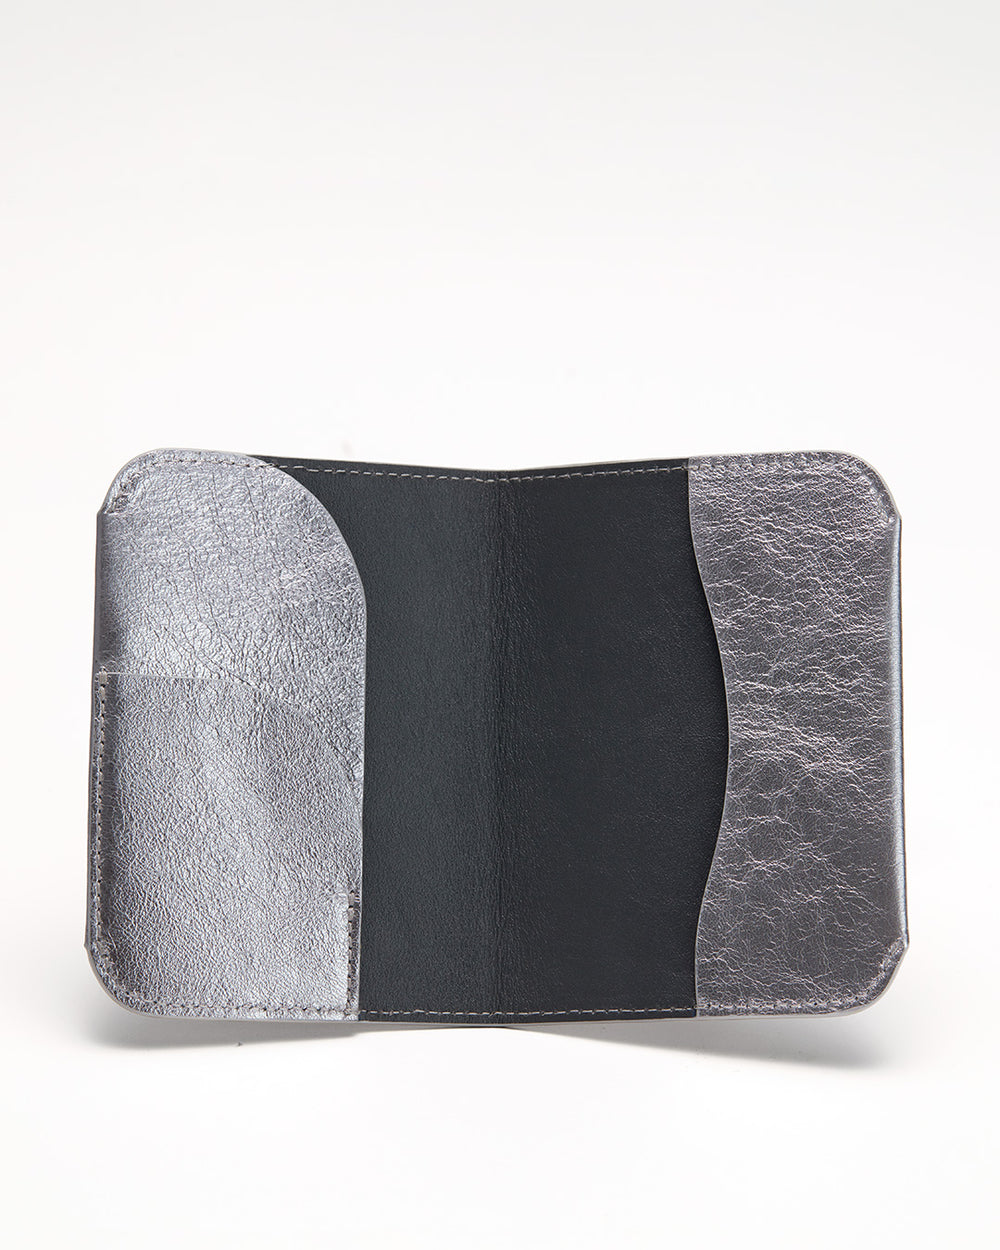 Open wallet on a plain background